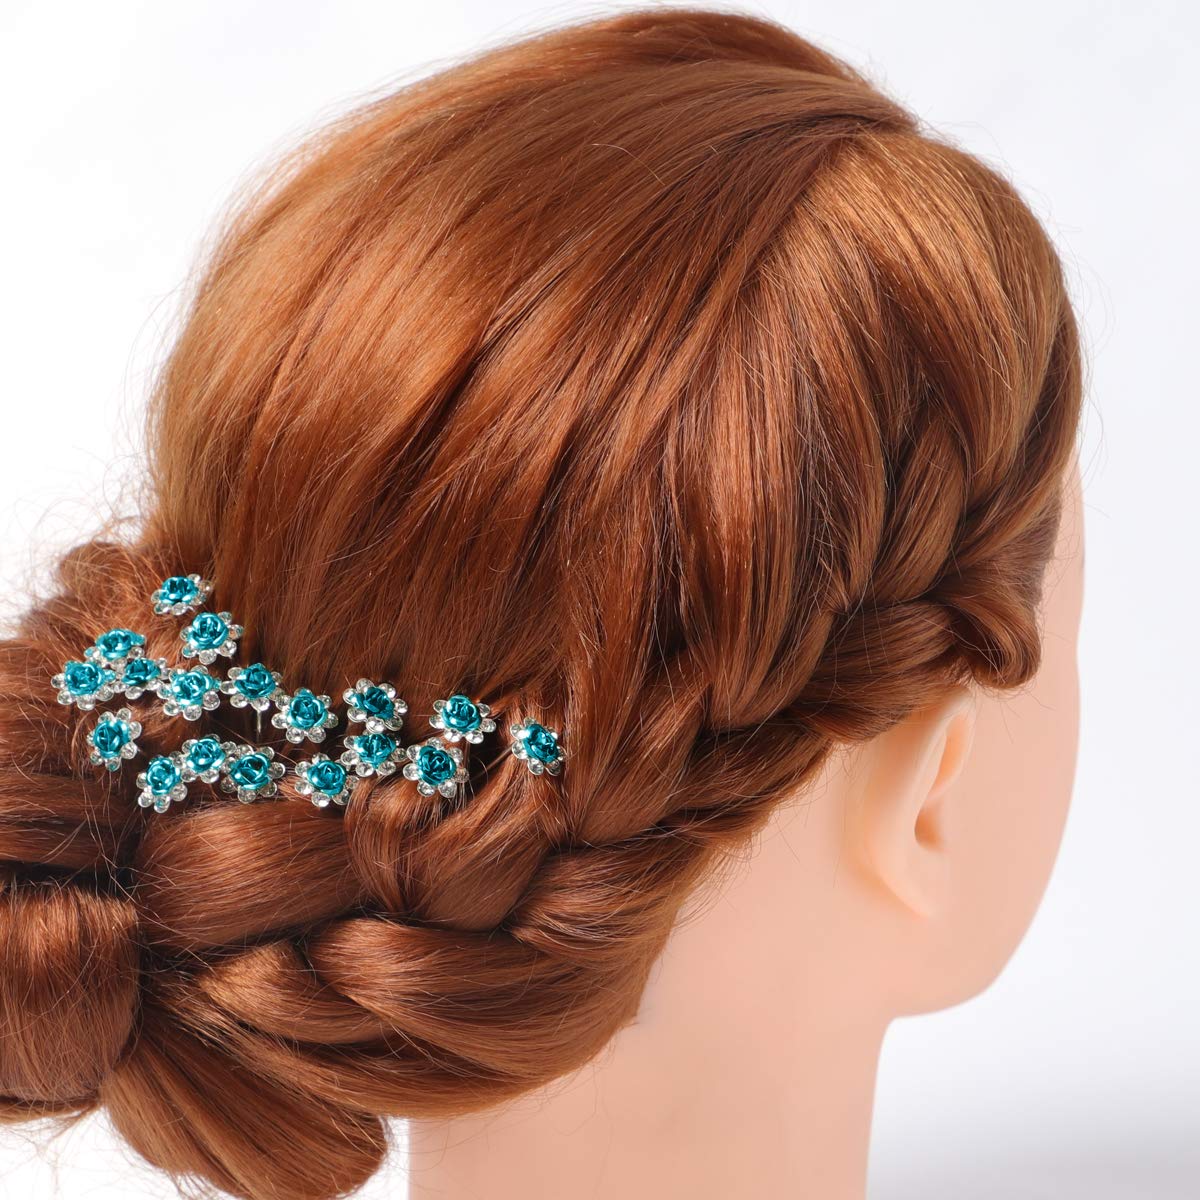 BETITETO 40 Pcs U-Shaped Flower Rhinestone Hair Pins Crystal Hair Accessories for Bridal Wedding Party Girls' Sweet Sixteen (Lake Blue)